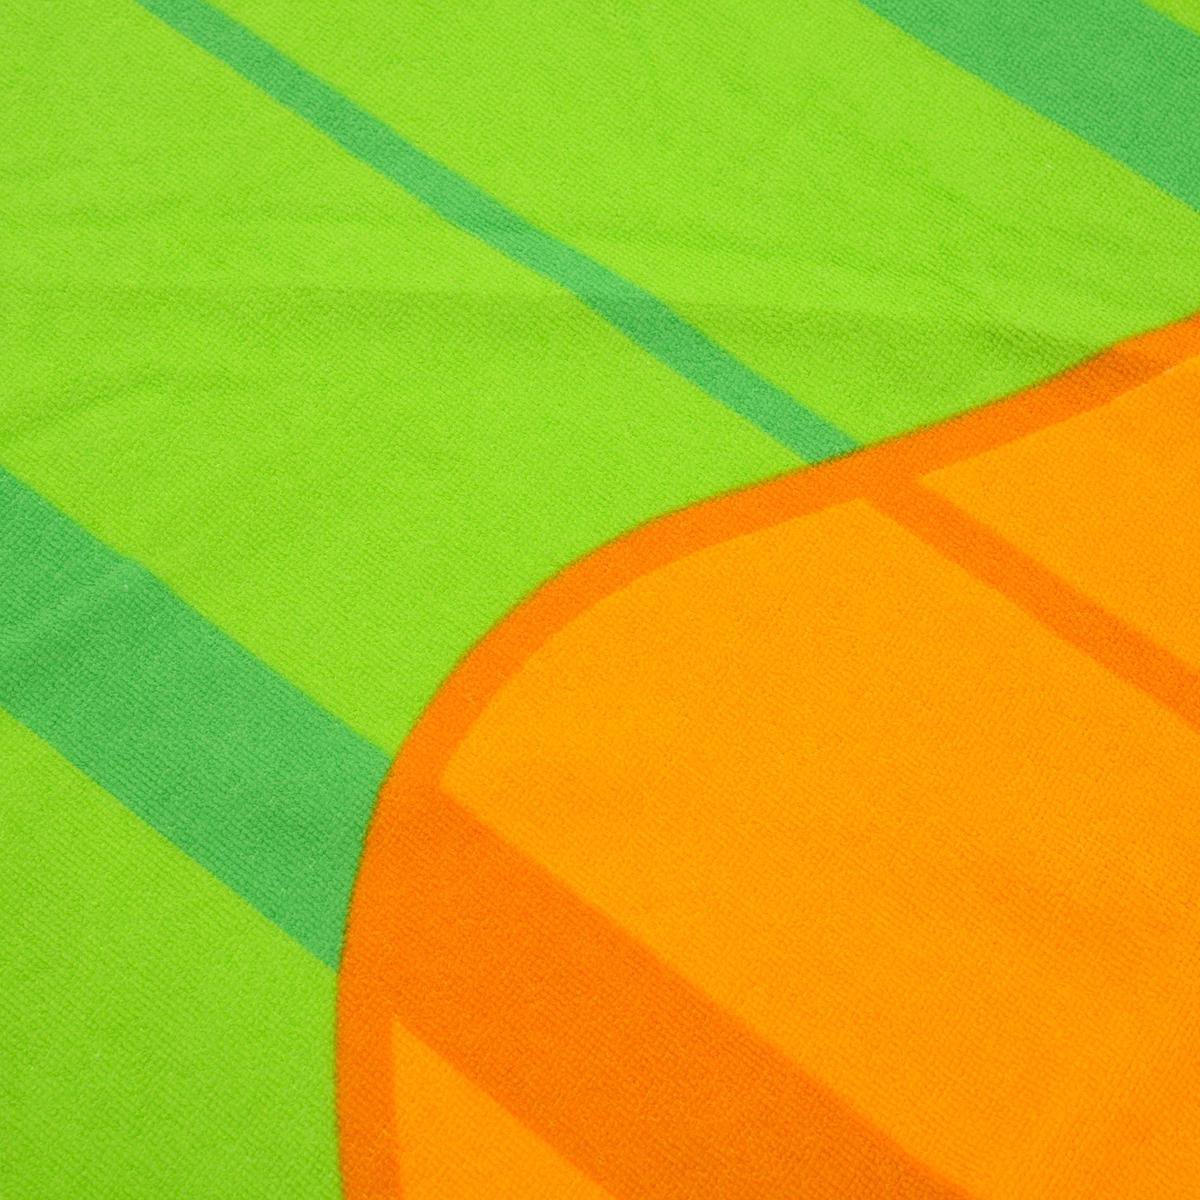 Yello strandlaken ijsje 85 x 165 cm/oranje/rood - Groen